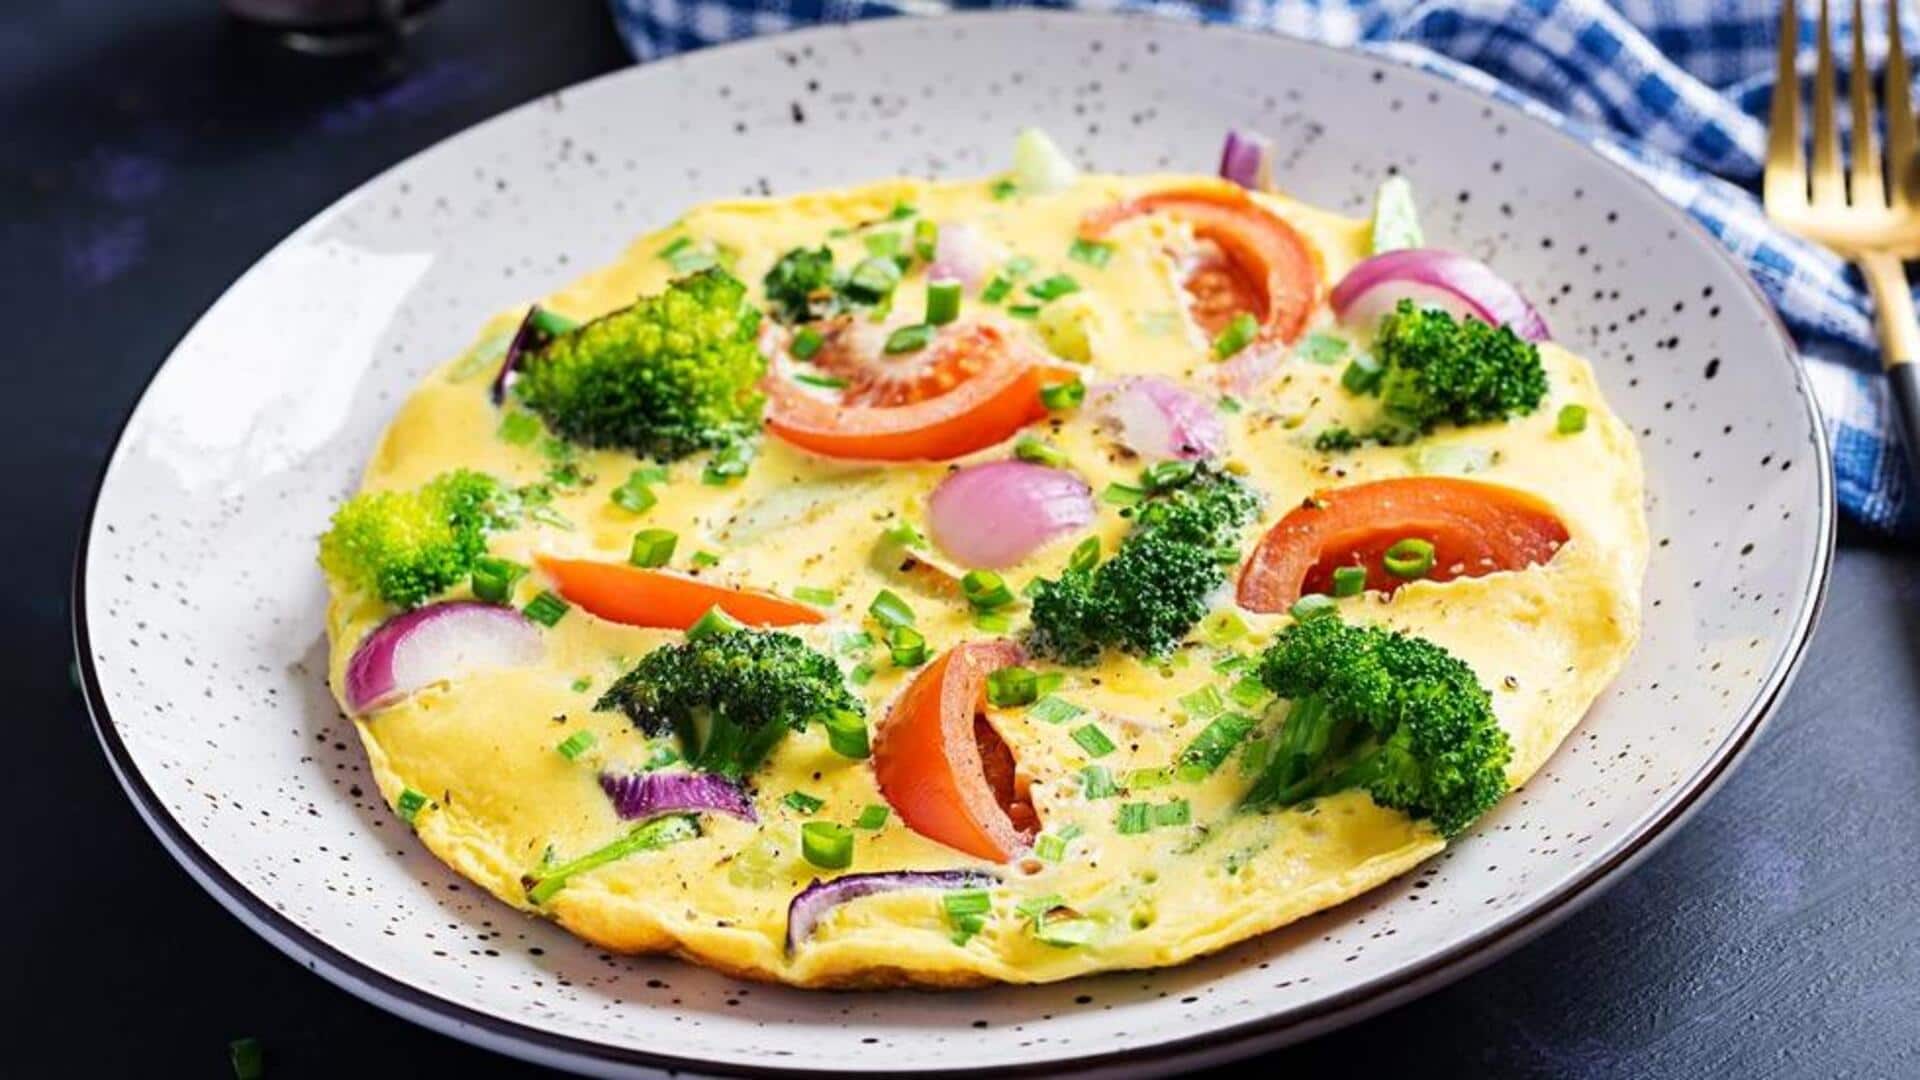 Recipe: Make this classic eggless Italian frittata at home